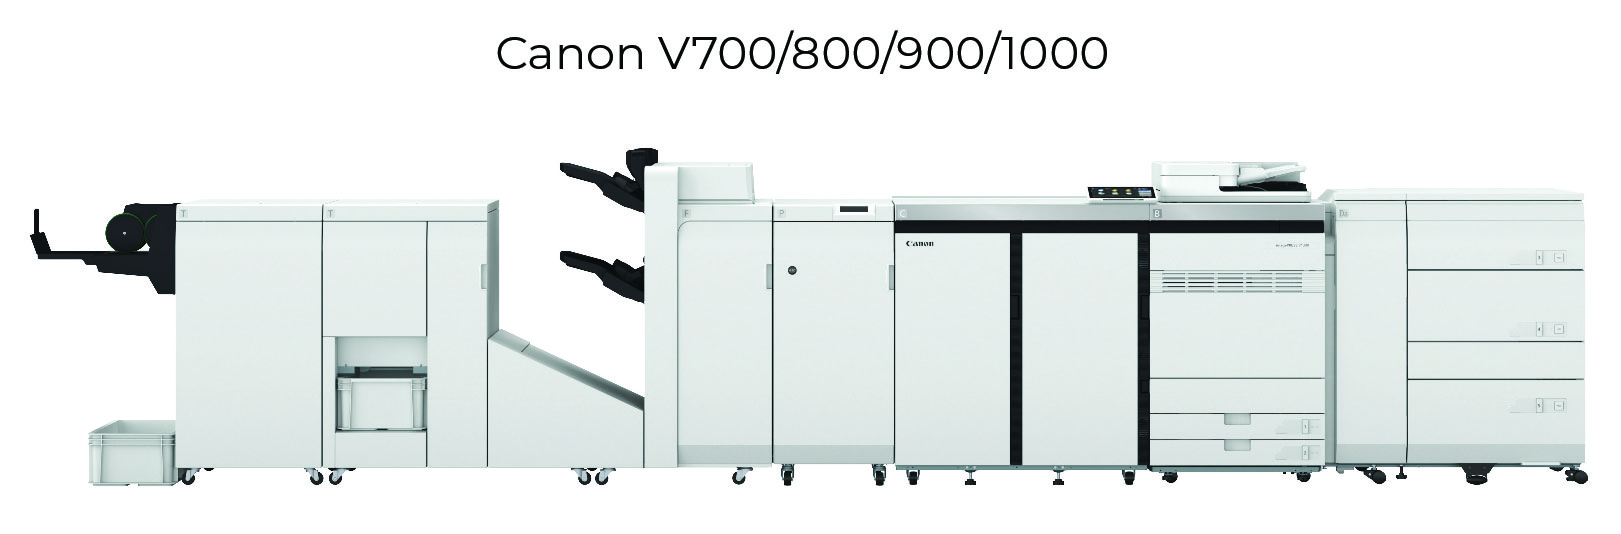 Canon V700/800/900/1000 Production Printer